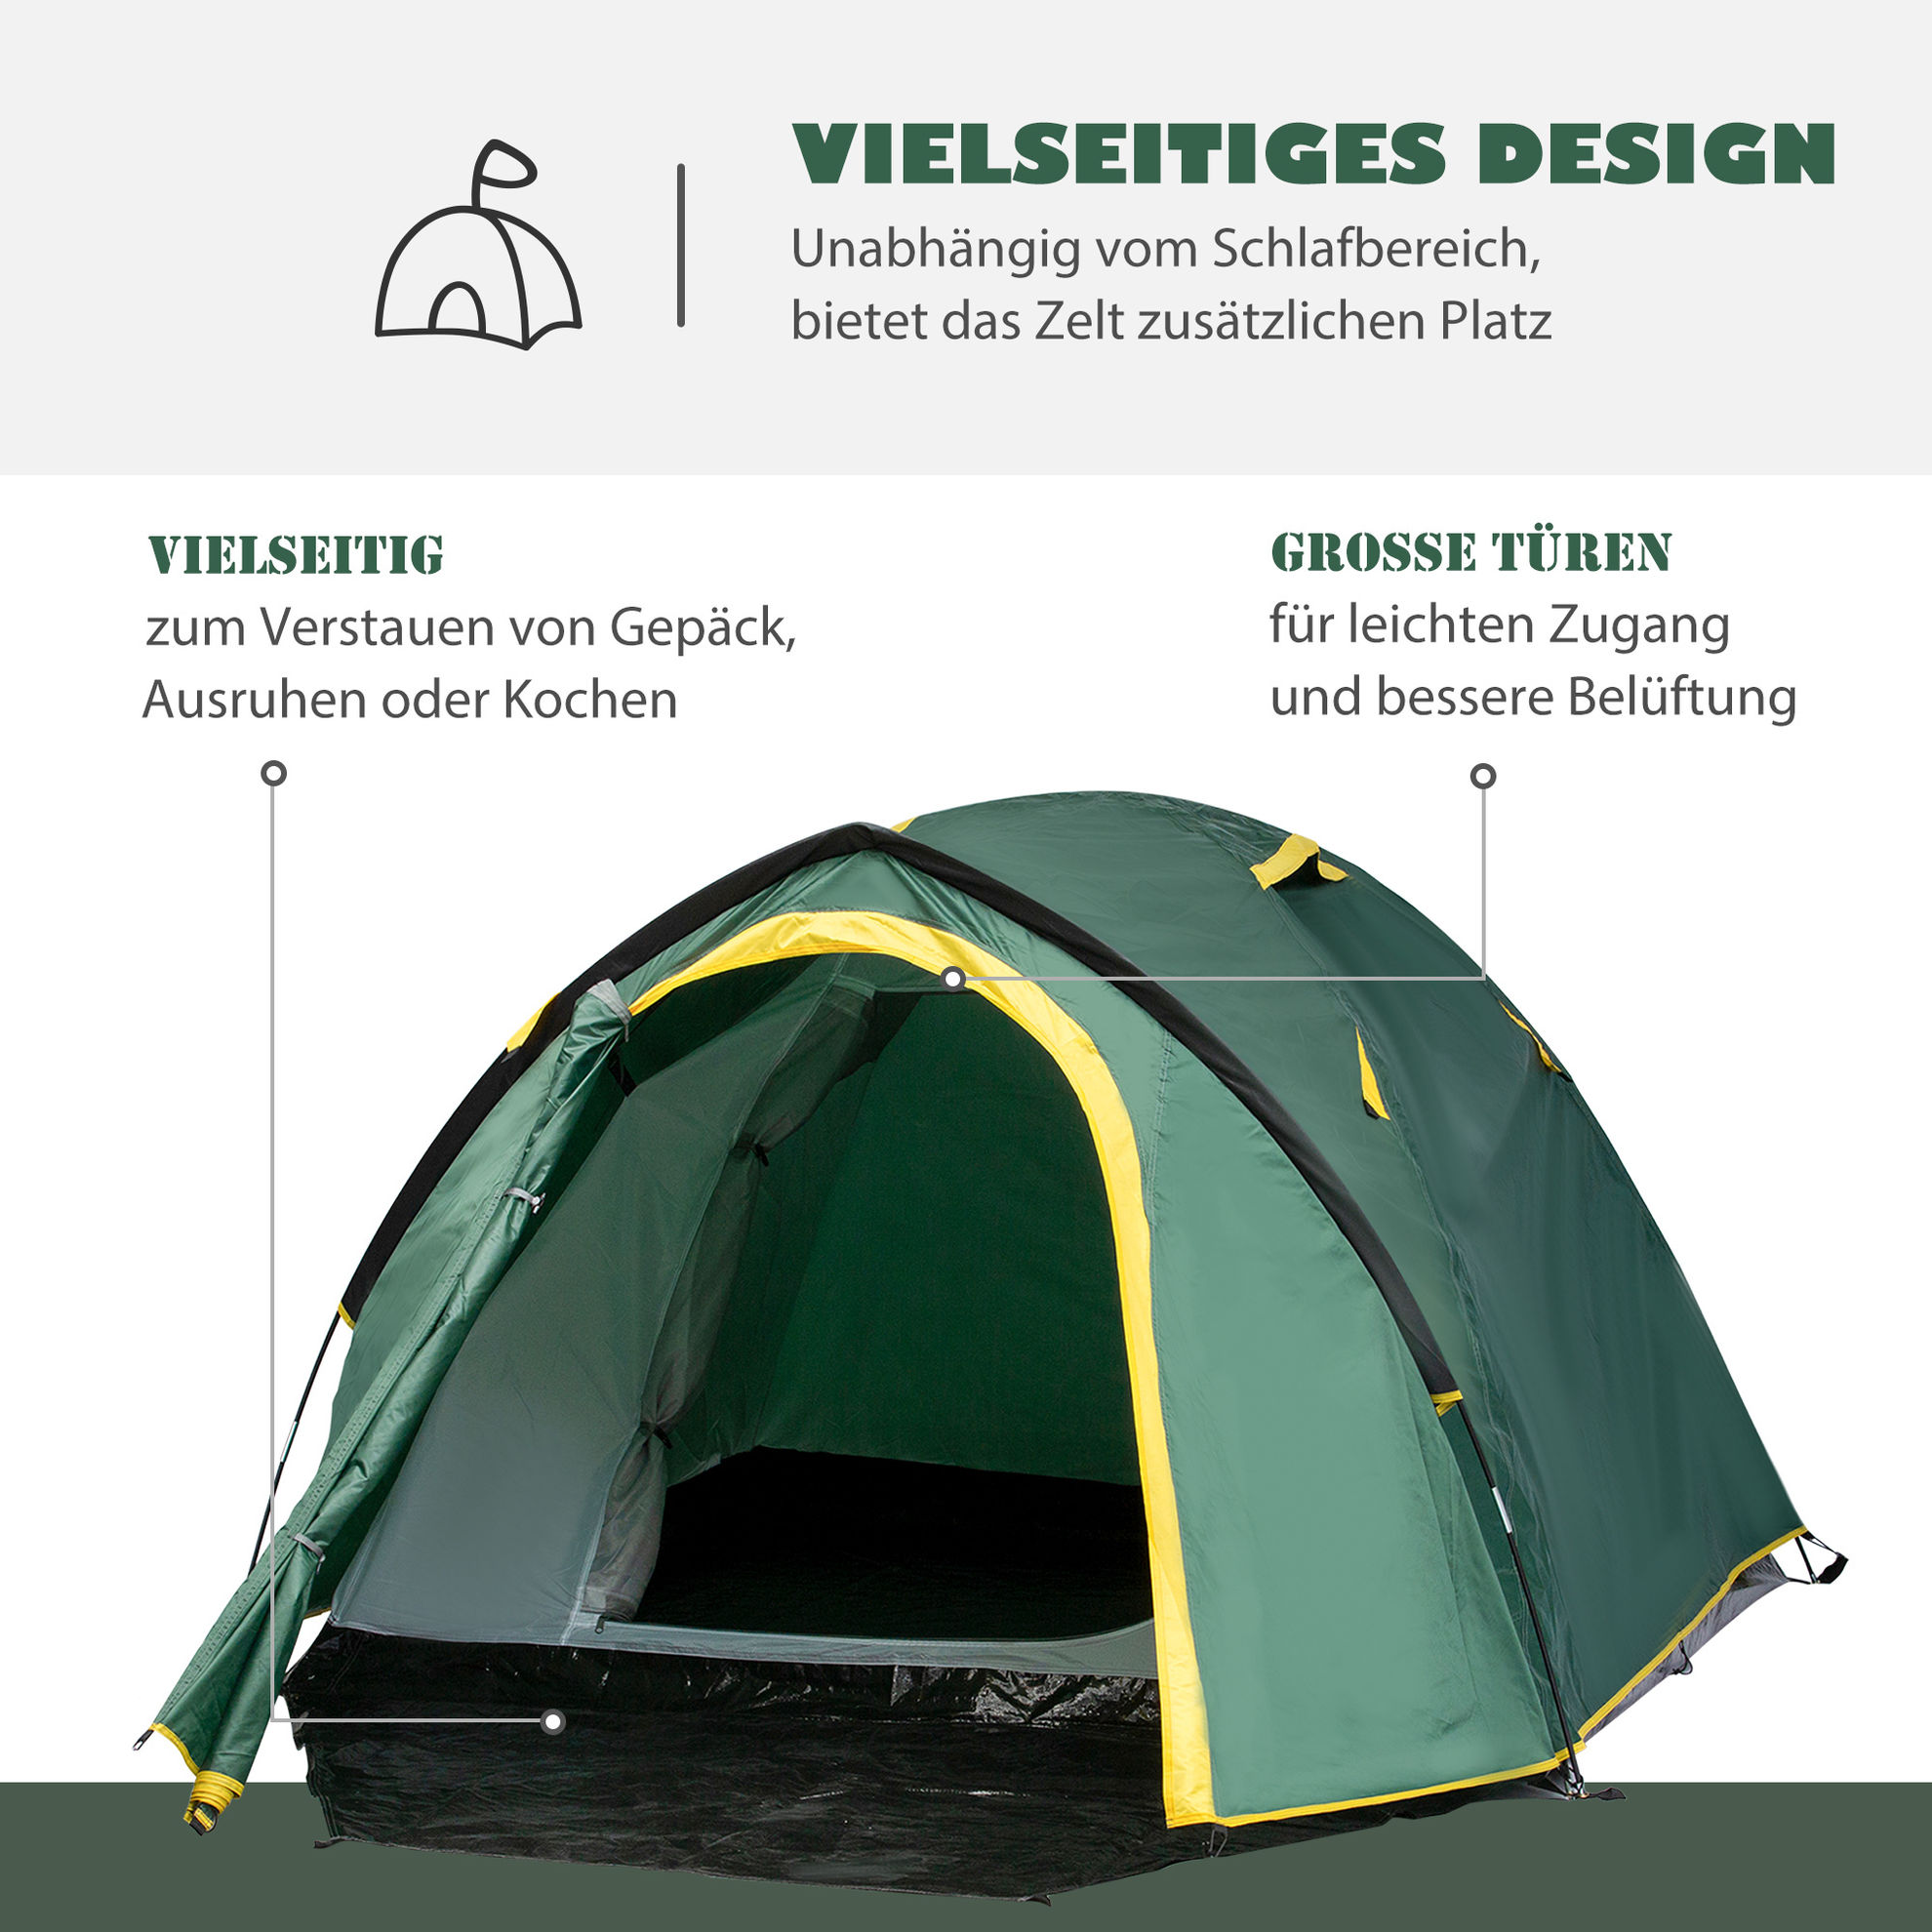 Campingzelt für 3-4 Personen jetzt bei Weltbild.de bestellen